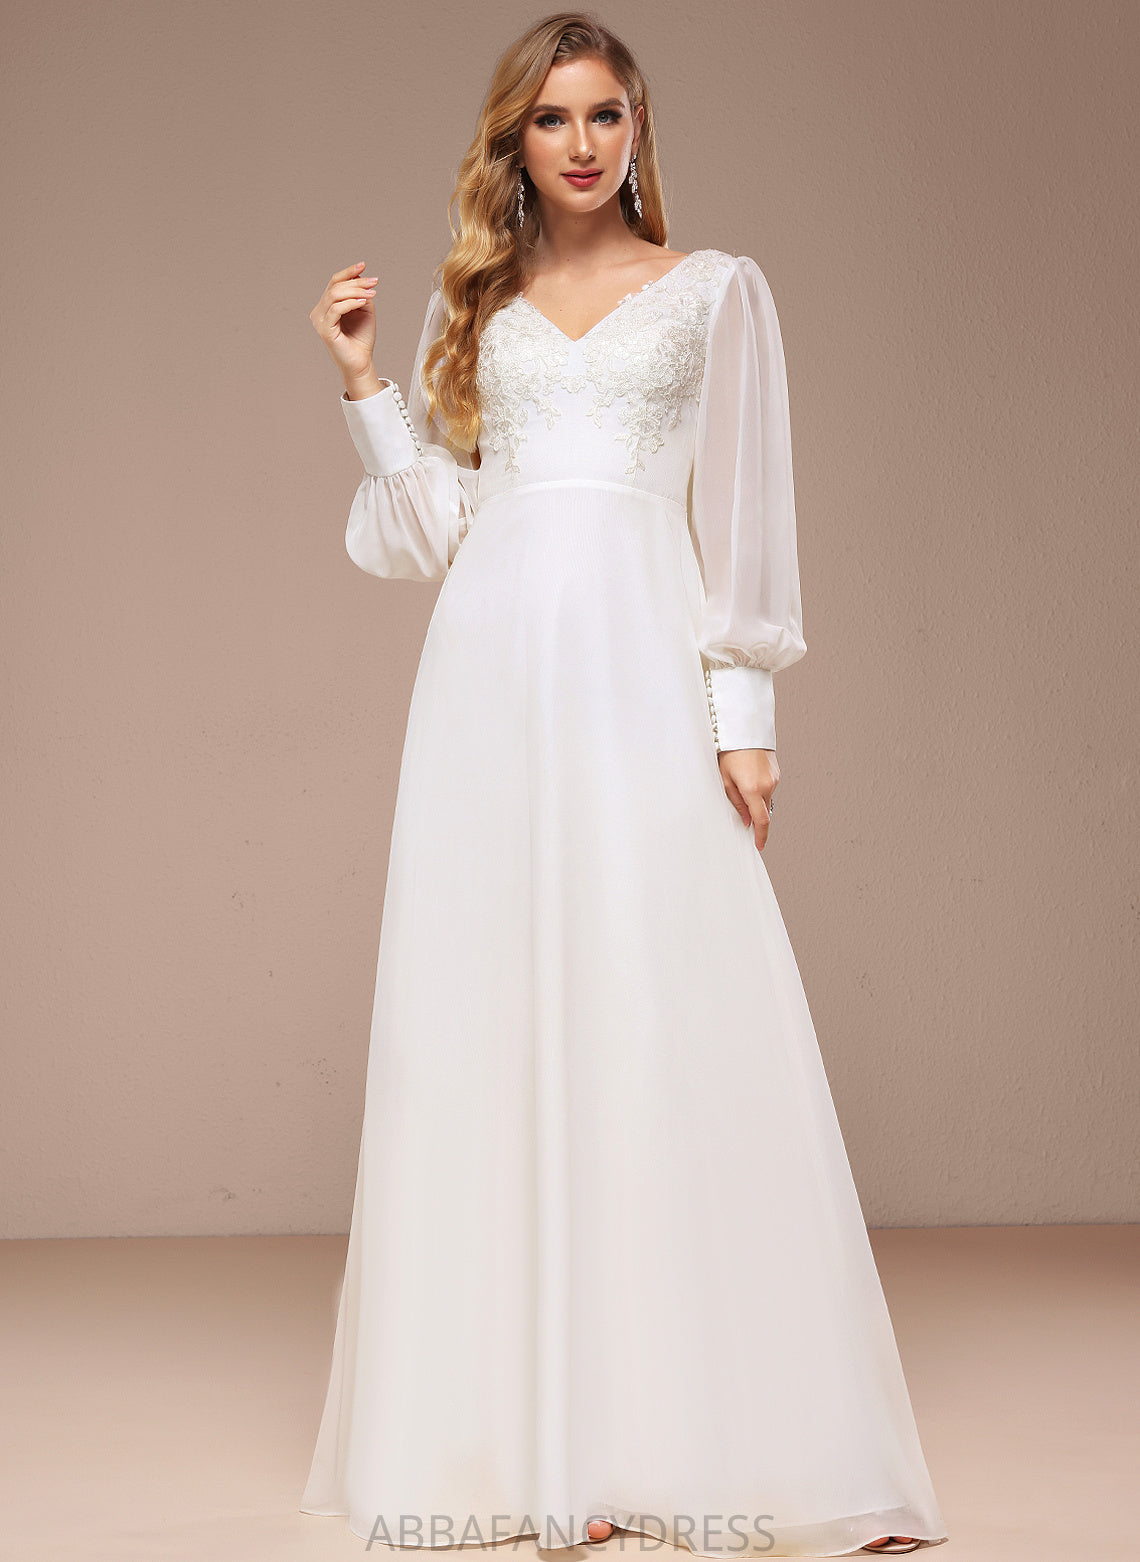 Aniya V-neck With Lace Sequins Wedding A-Line Dress Wedding Dresses Floor-Length Chiffon